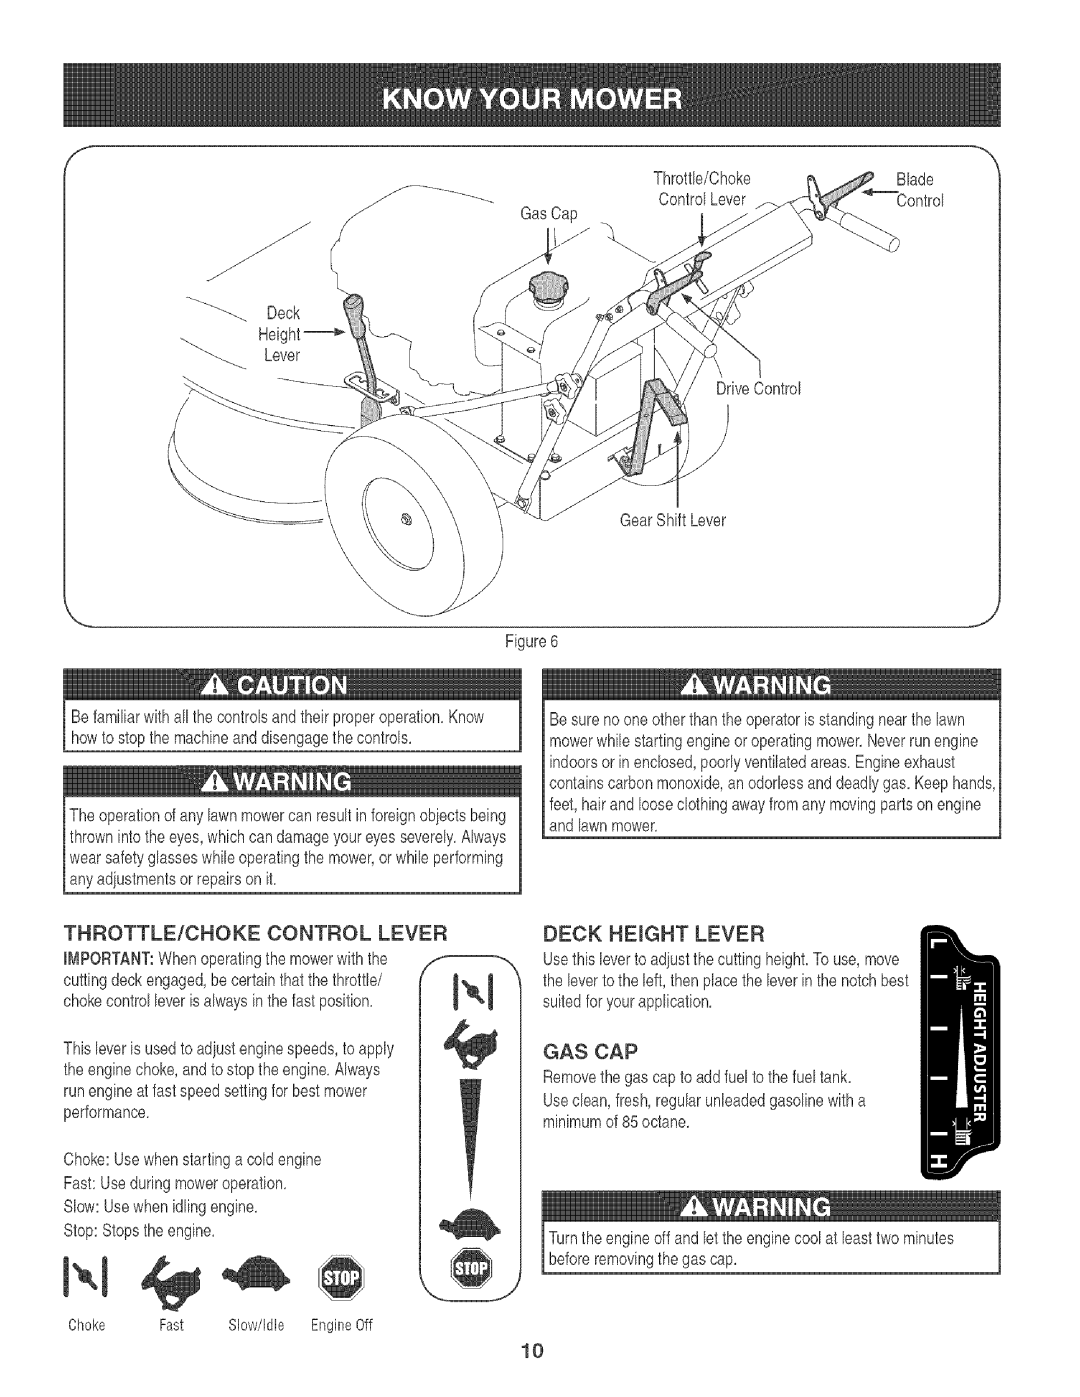 Craftsman 247.88933 manual Throttle/Choke Control Lever, Deck Height Lever, Gas Cap 